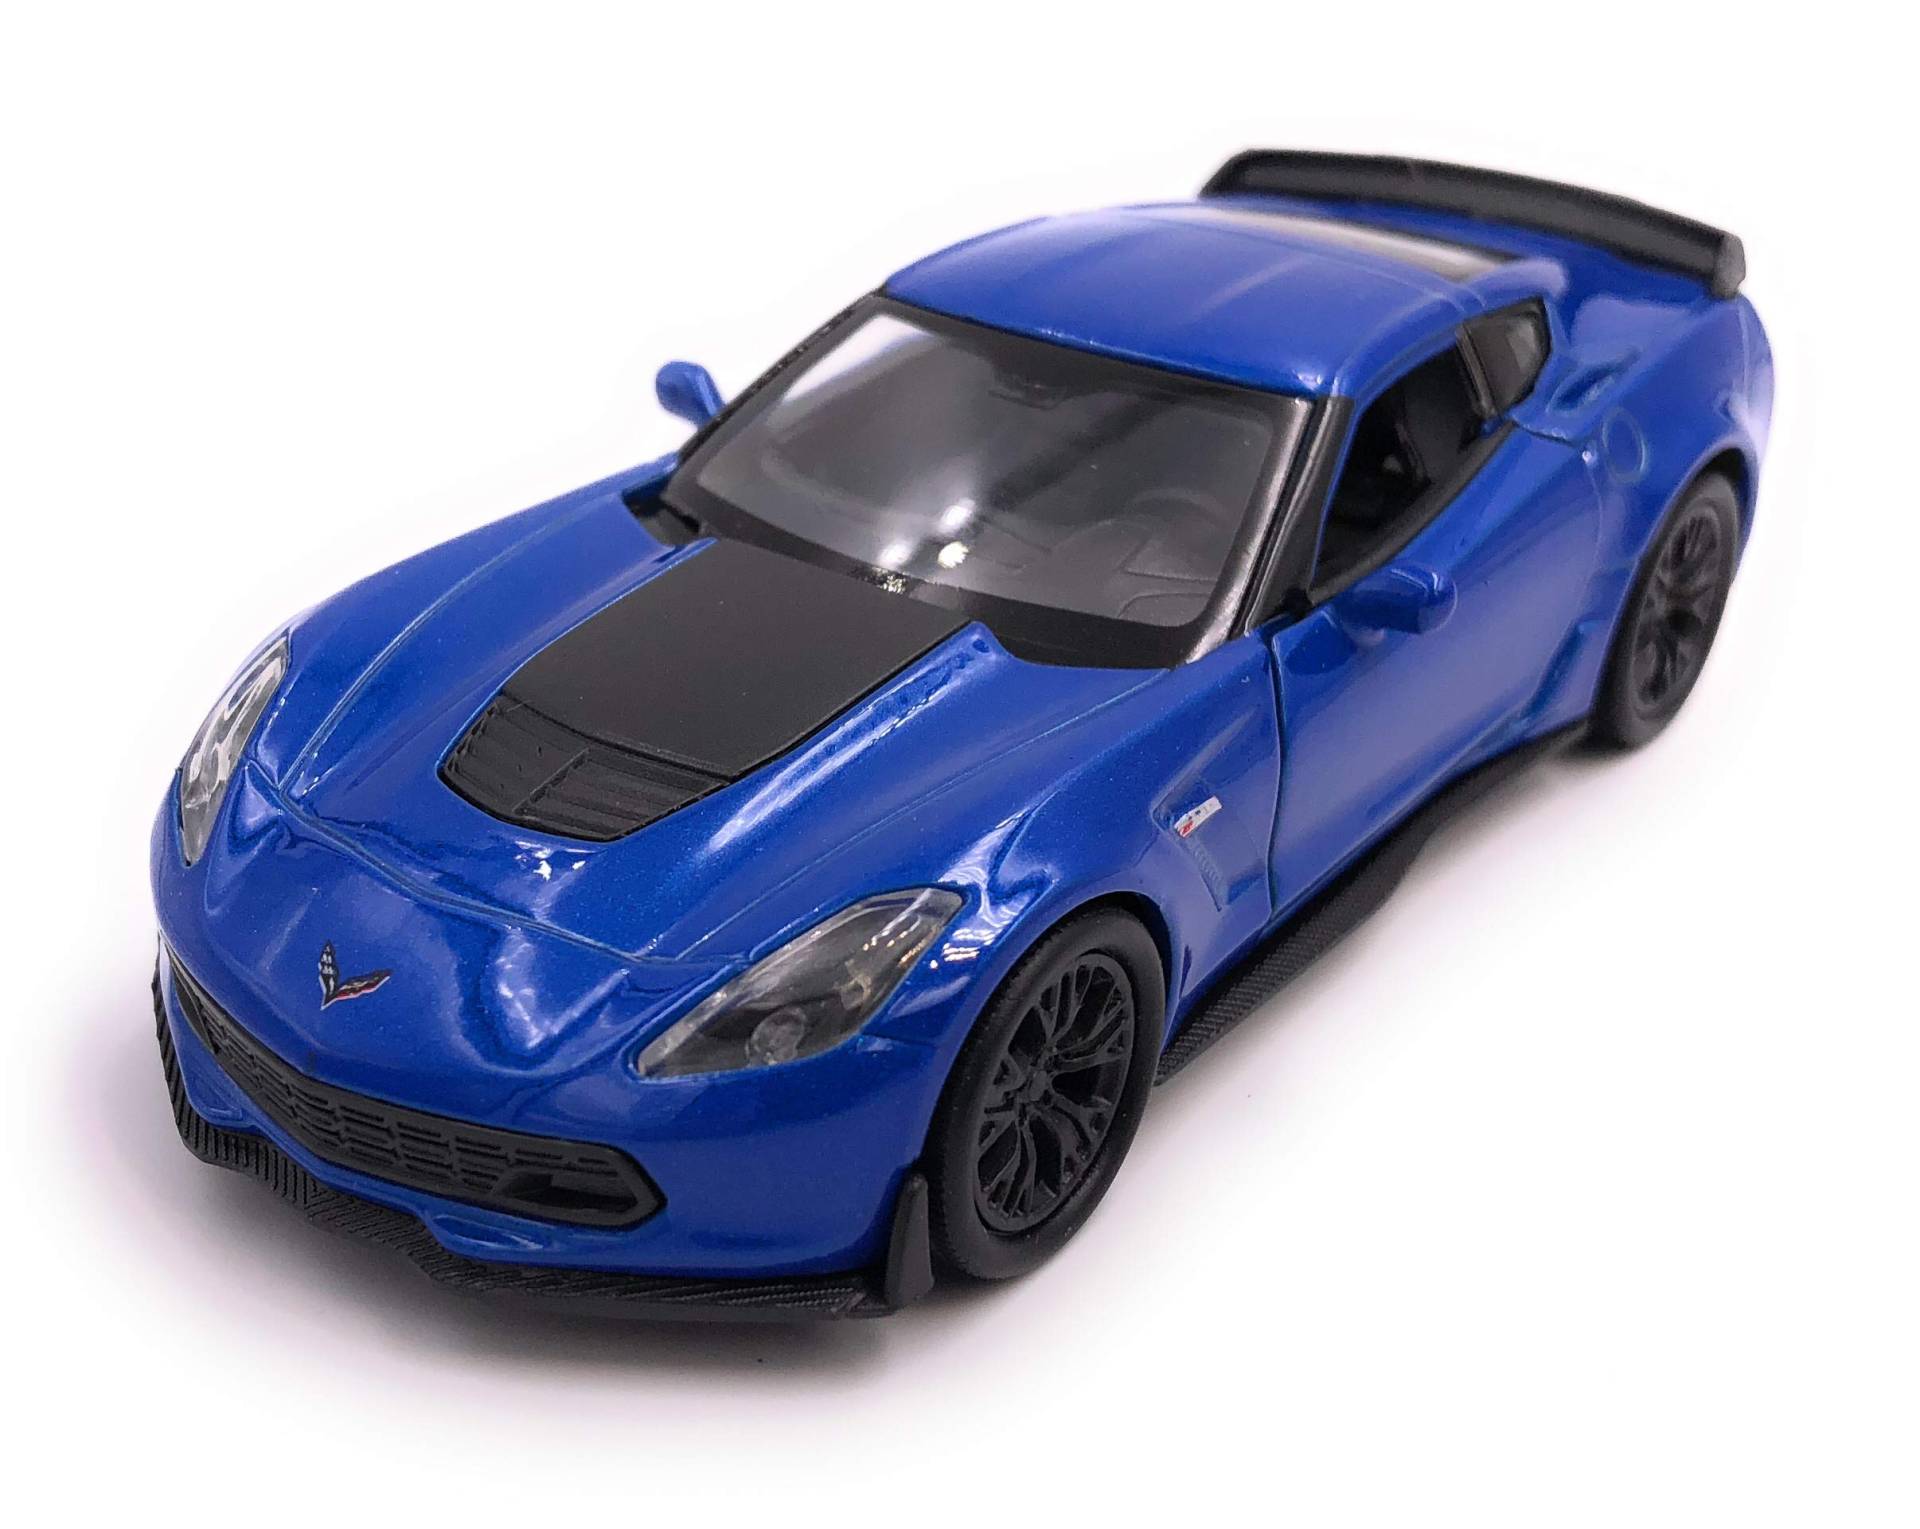 H-Customs Corvette Z06 Sportwagen Modellauto Auto Lizenzprodukt 1:34-1:39 Blau von H-Customs